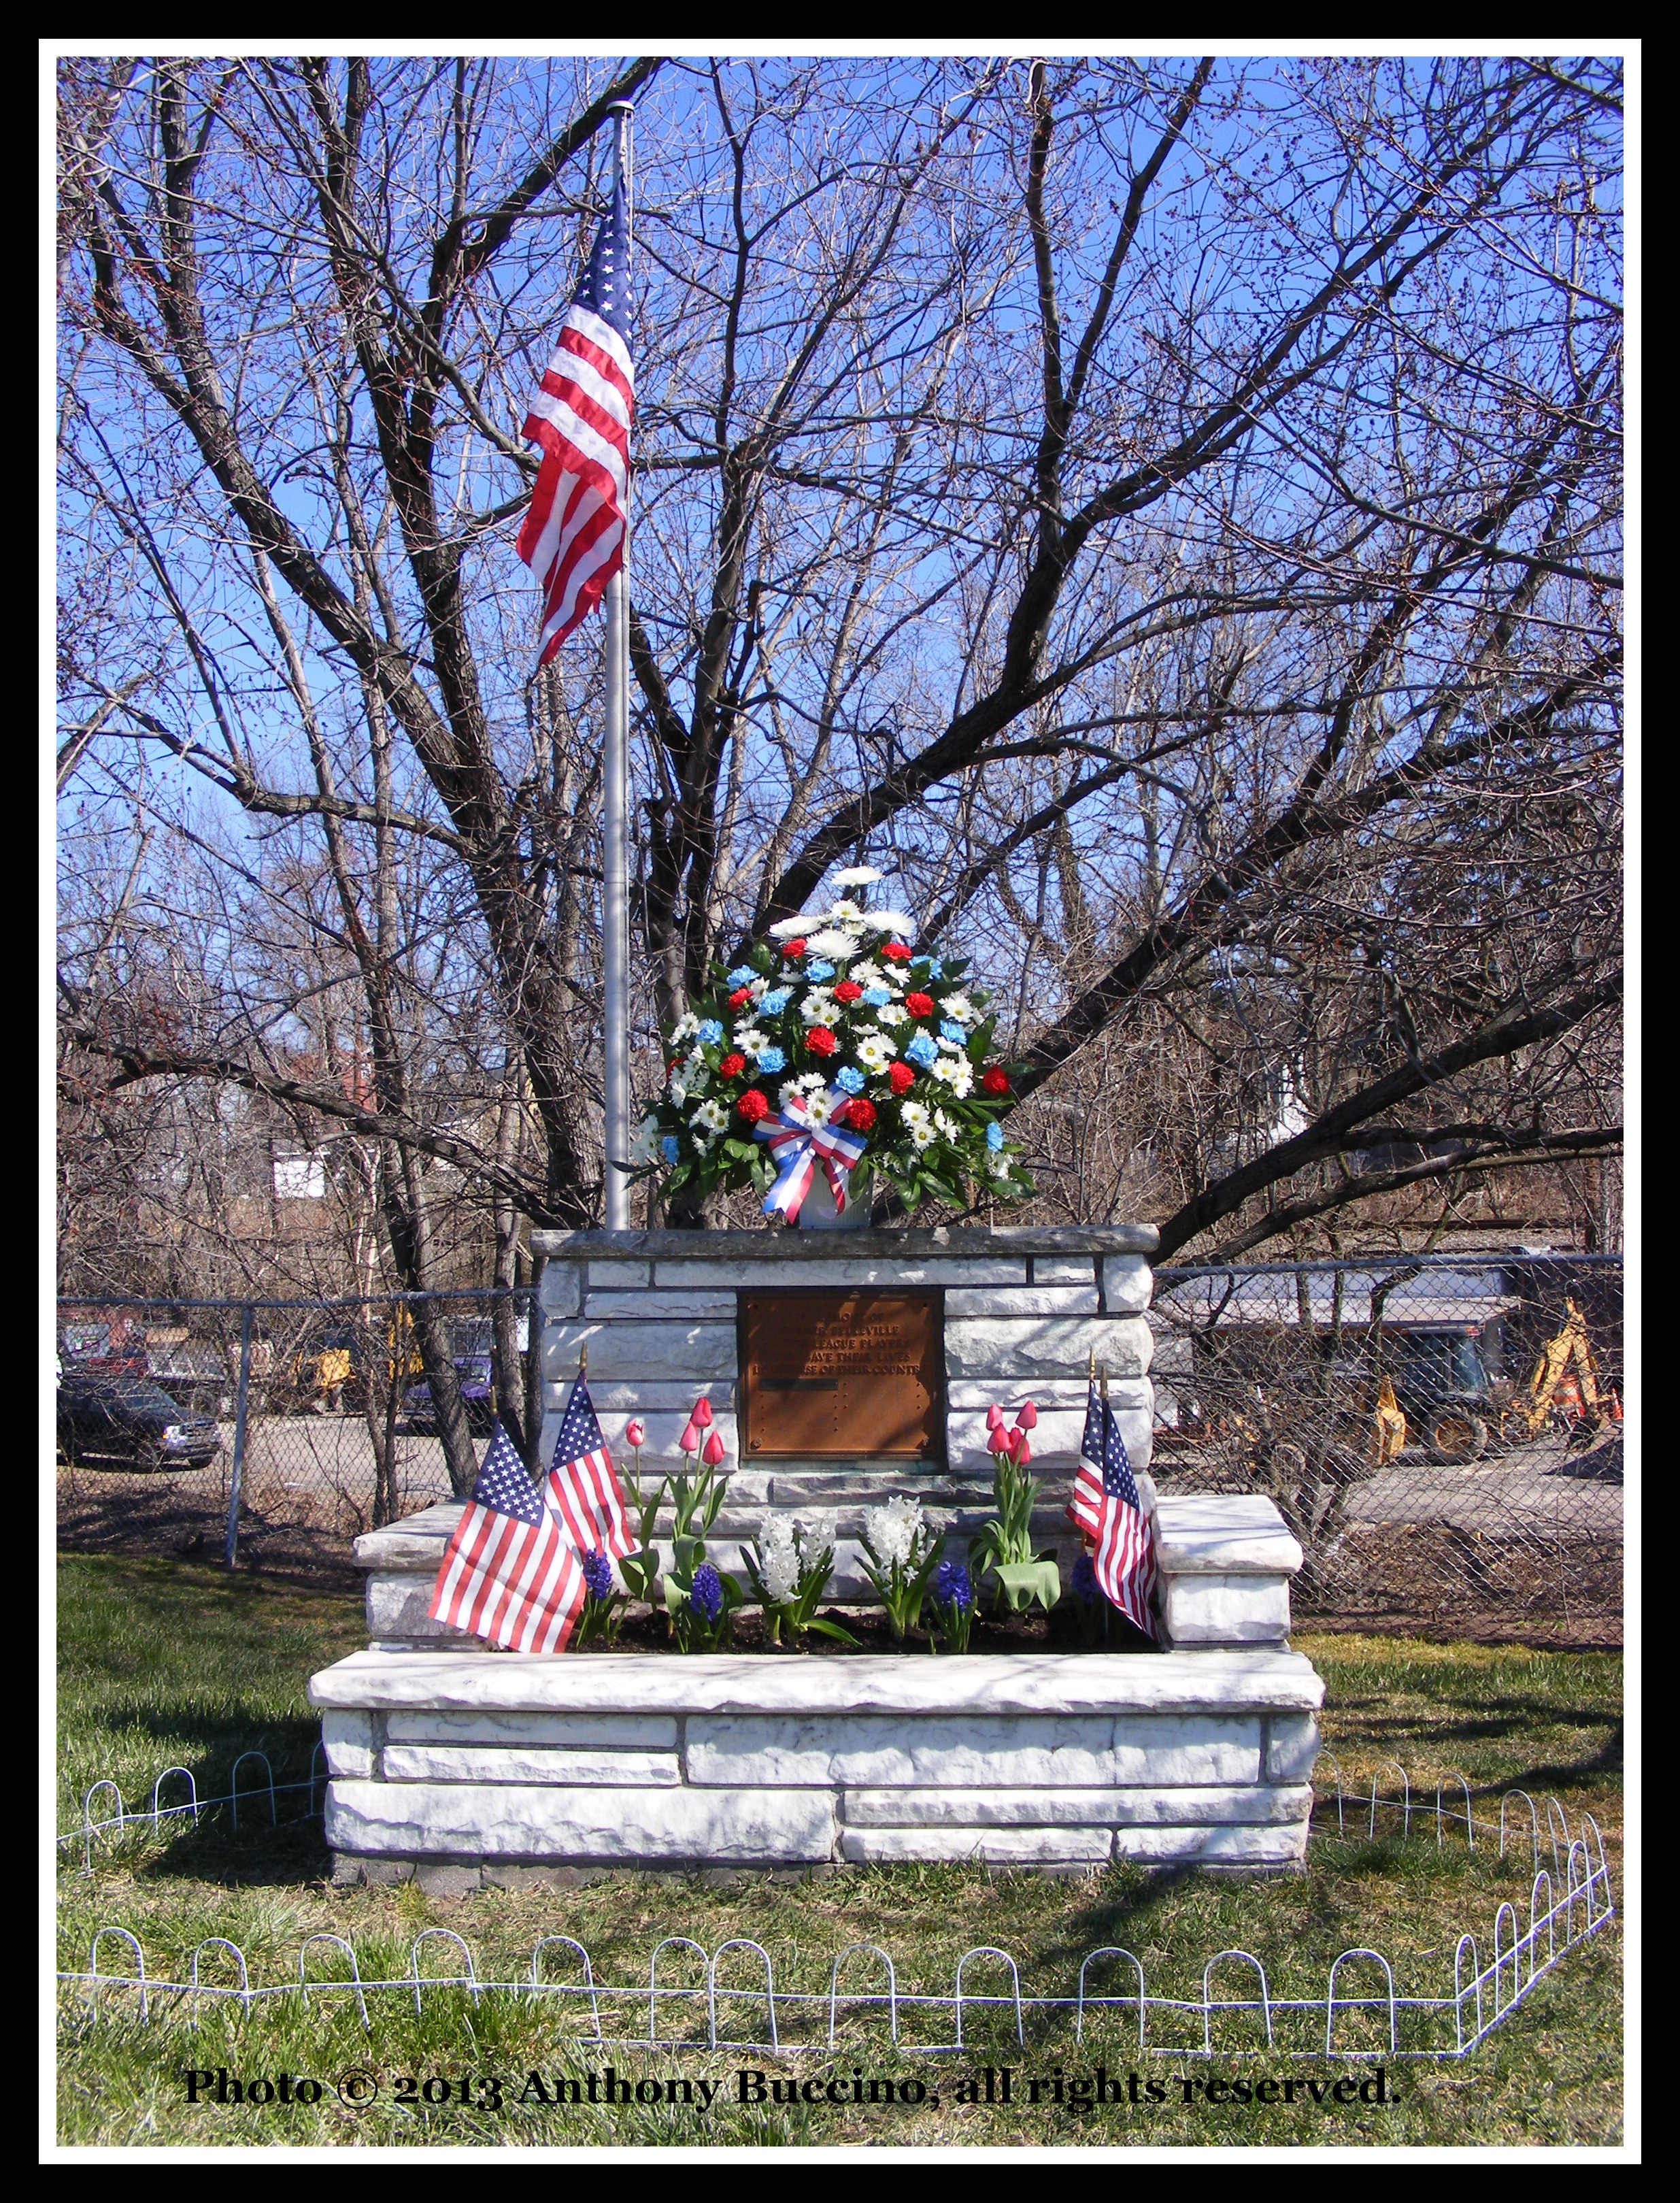 Roger Crowell, Little League Memorial, Belleville, NJ, KIA Vietnam, Copyright © 2013 by Anthony Buccino